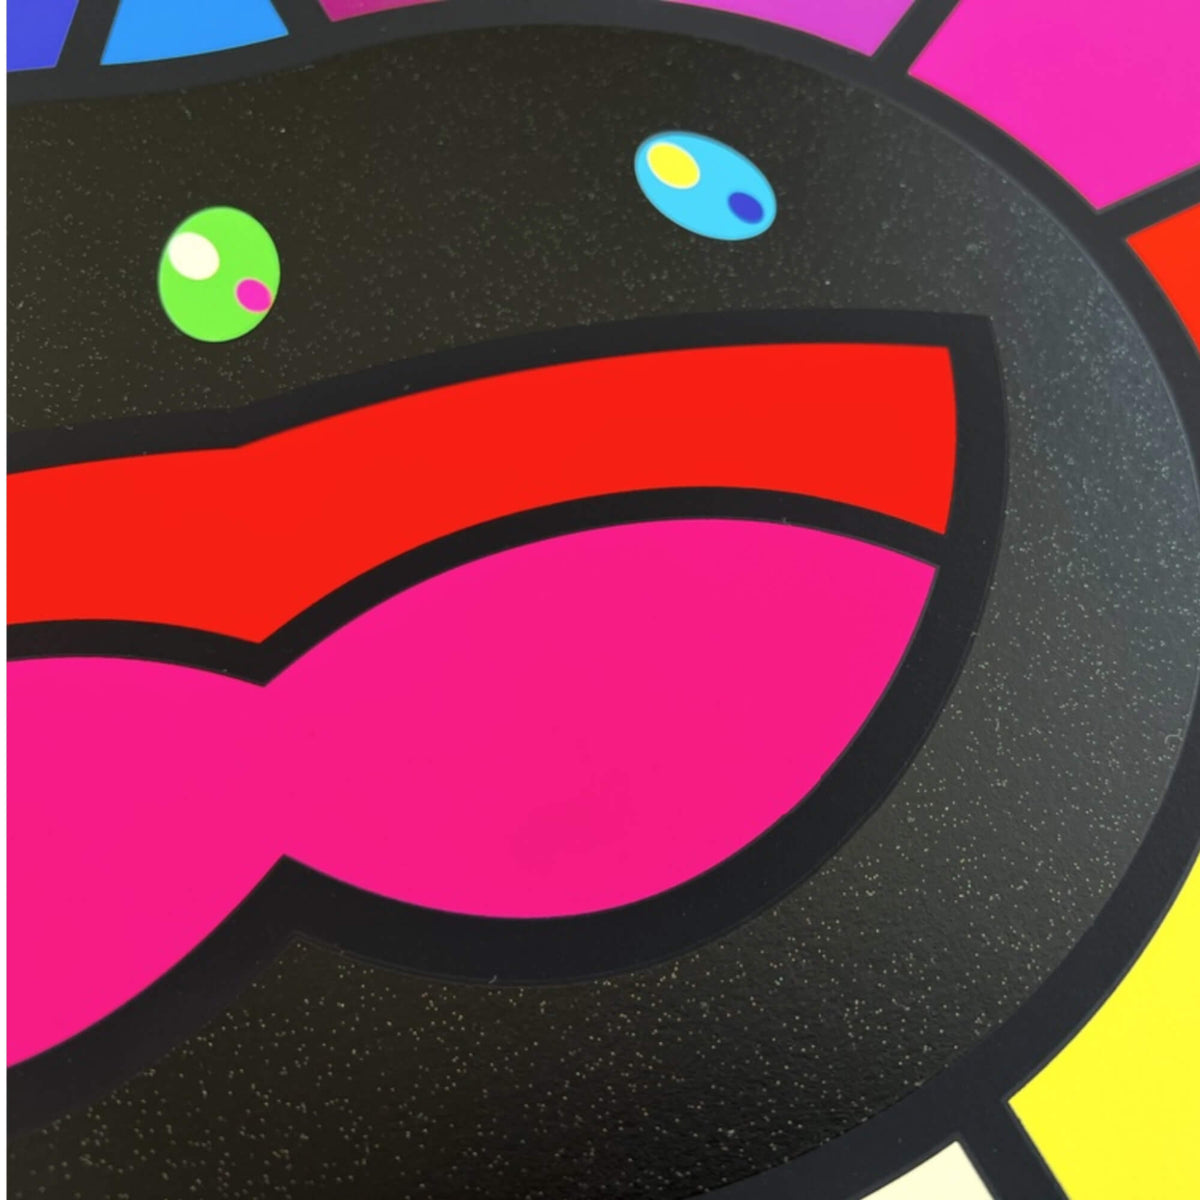 Takashi Murakami - Multicolor Double Face: Black for Sale